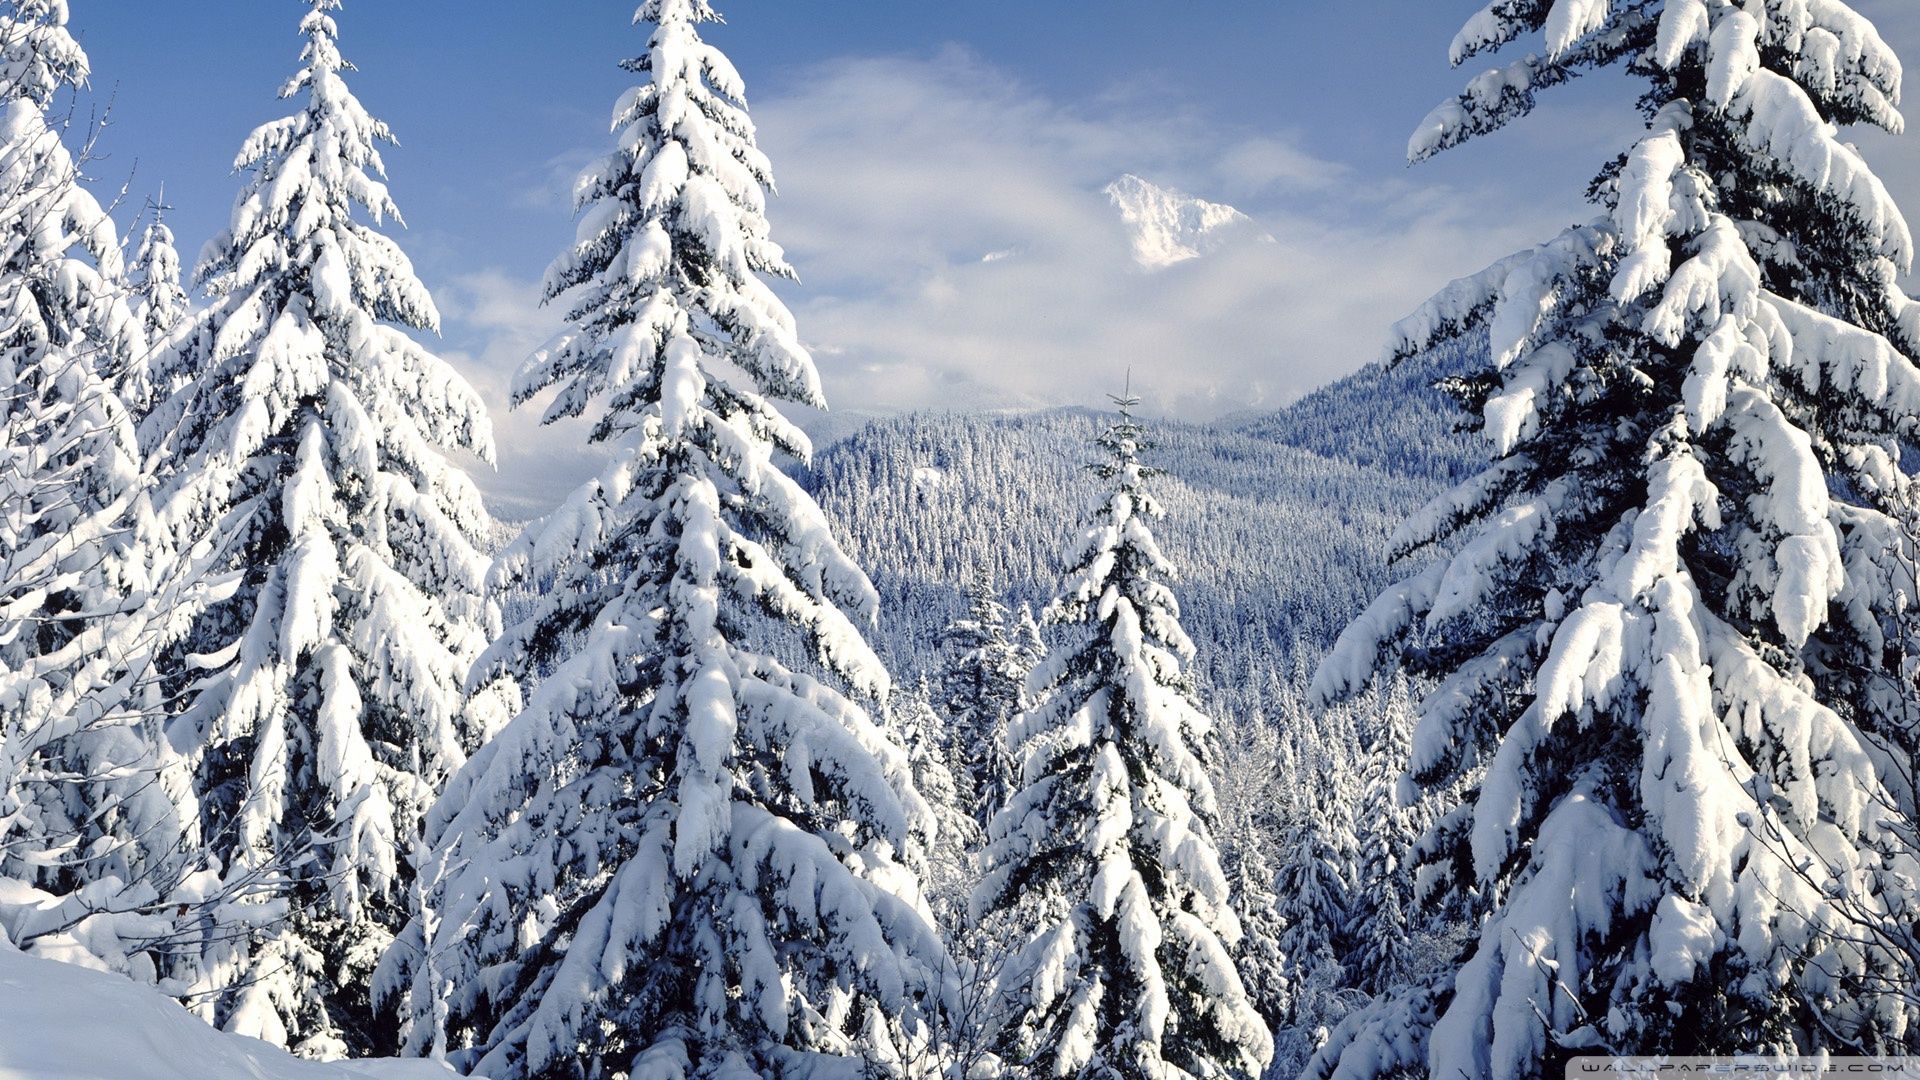 Snowy Trees wallpaper | 1920x1080 | #79851 | Winter | Pinterest